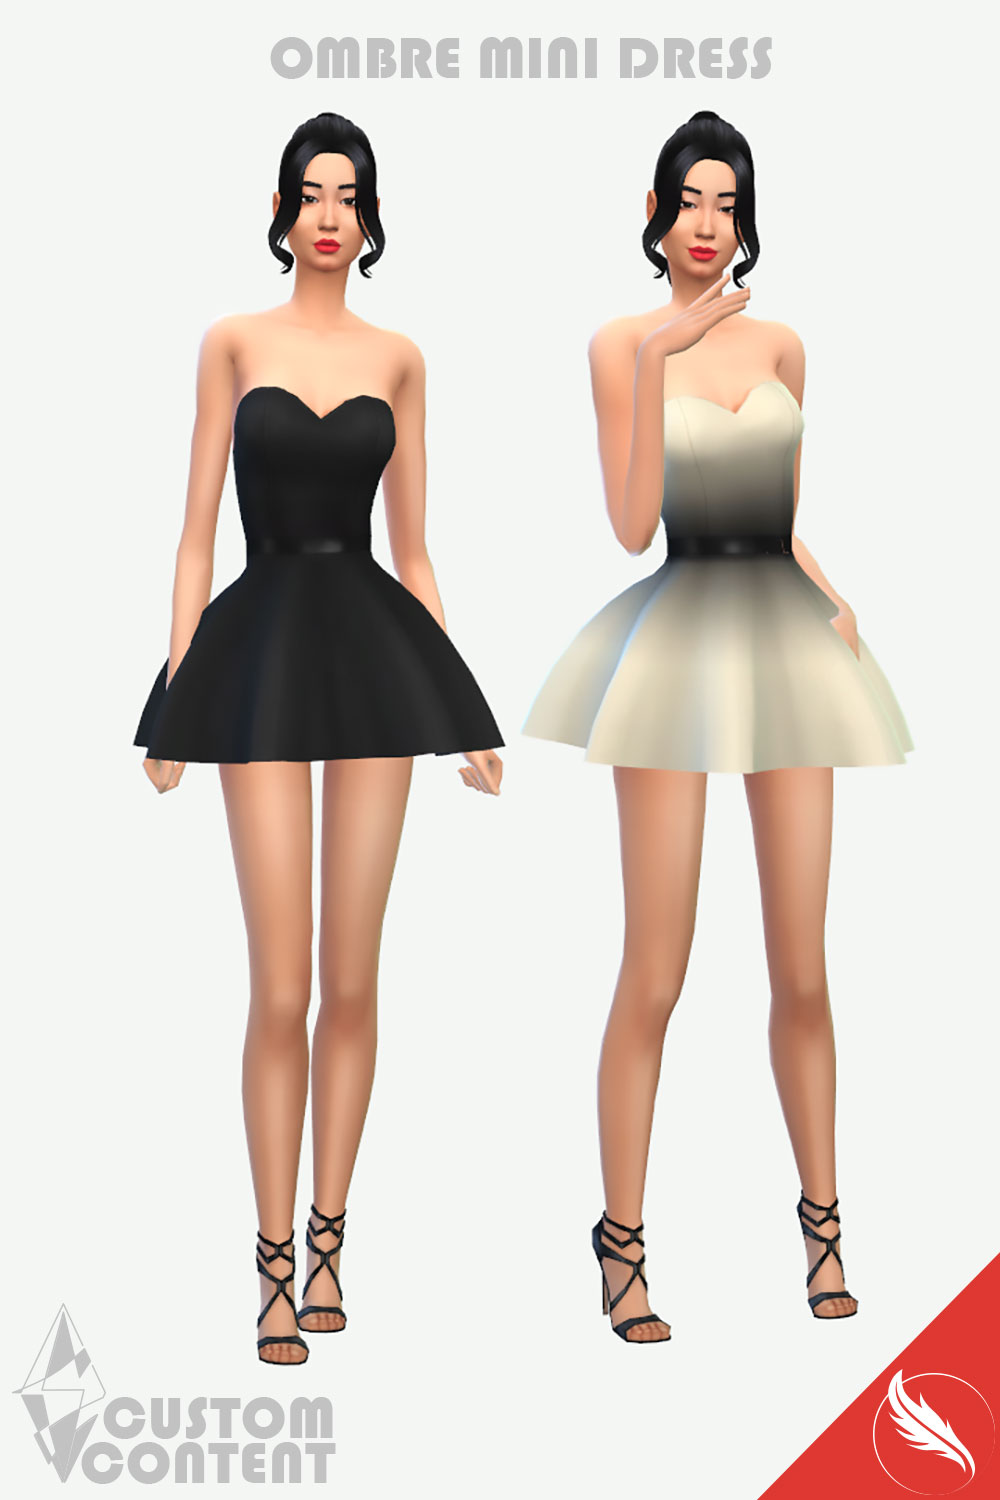 The Sims 4 Ombre Mini Dress